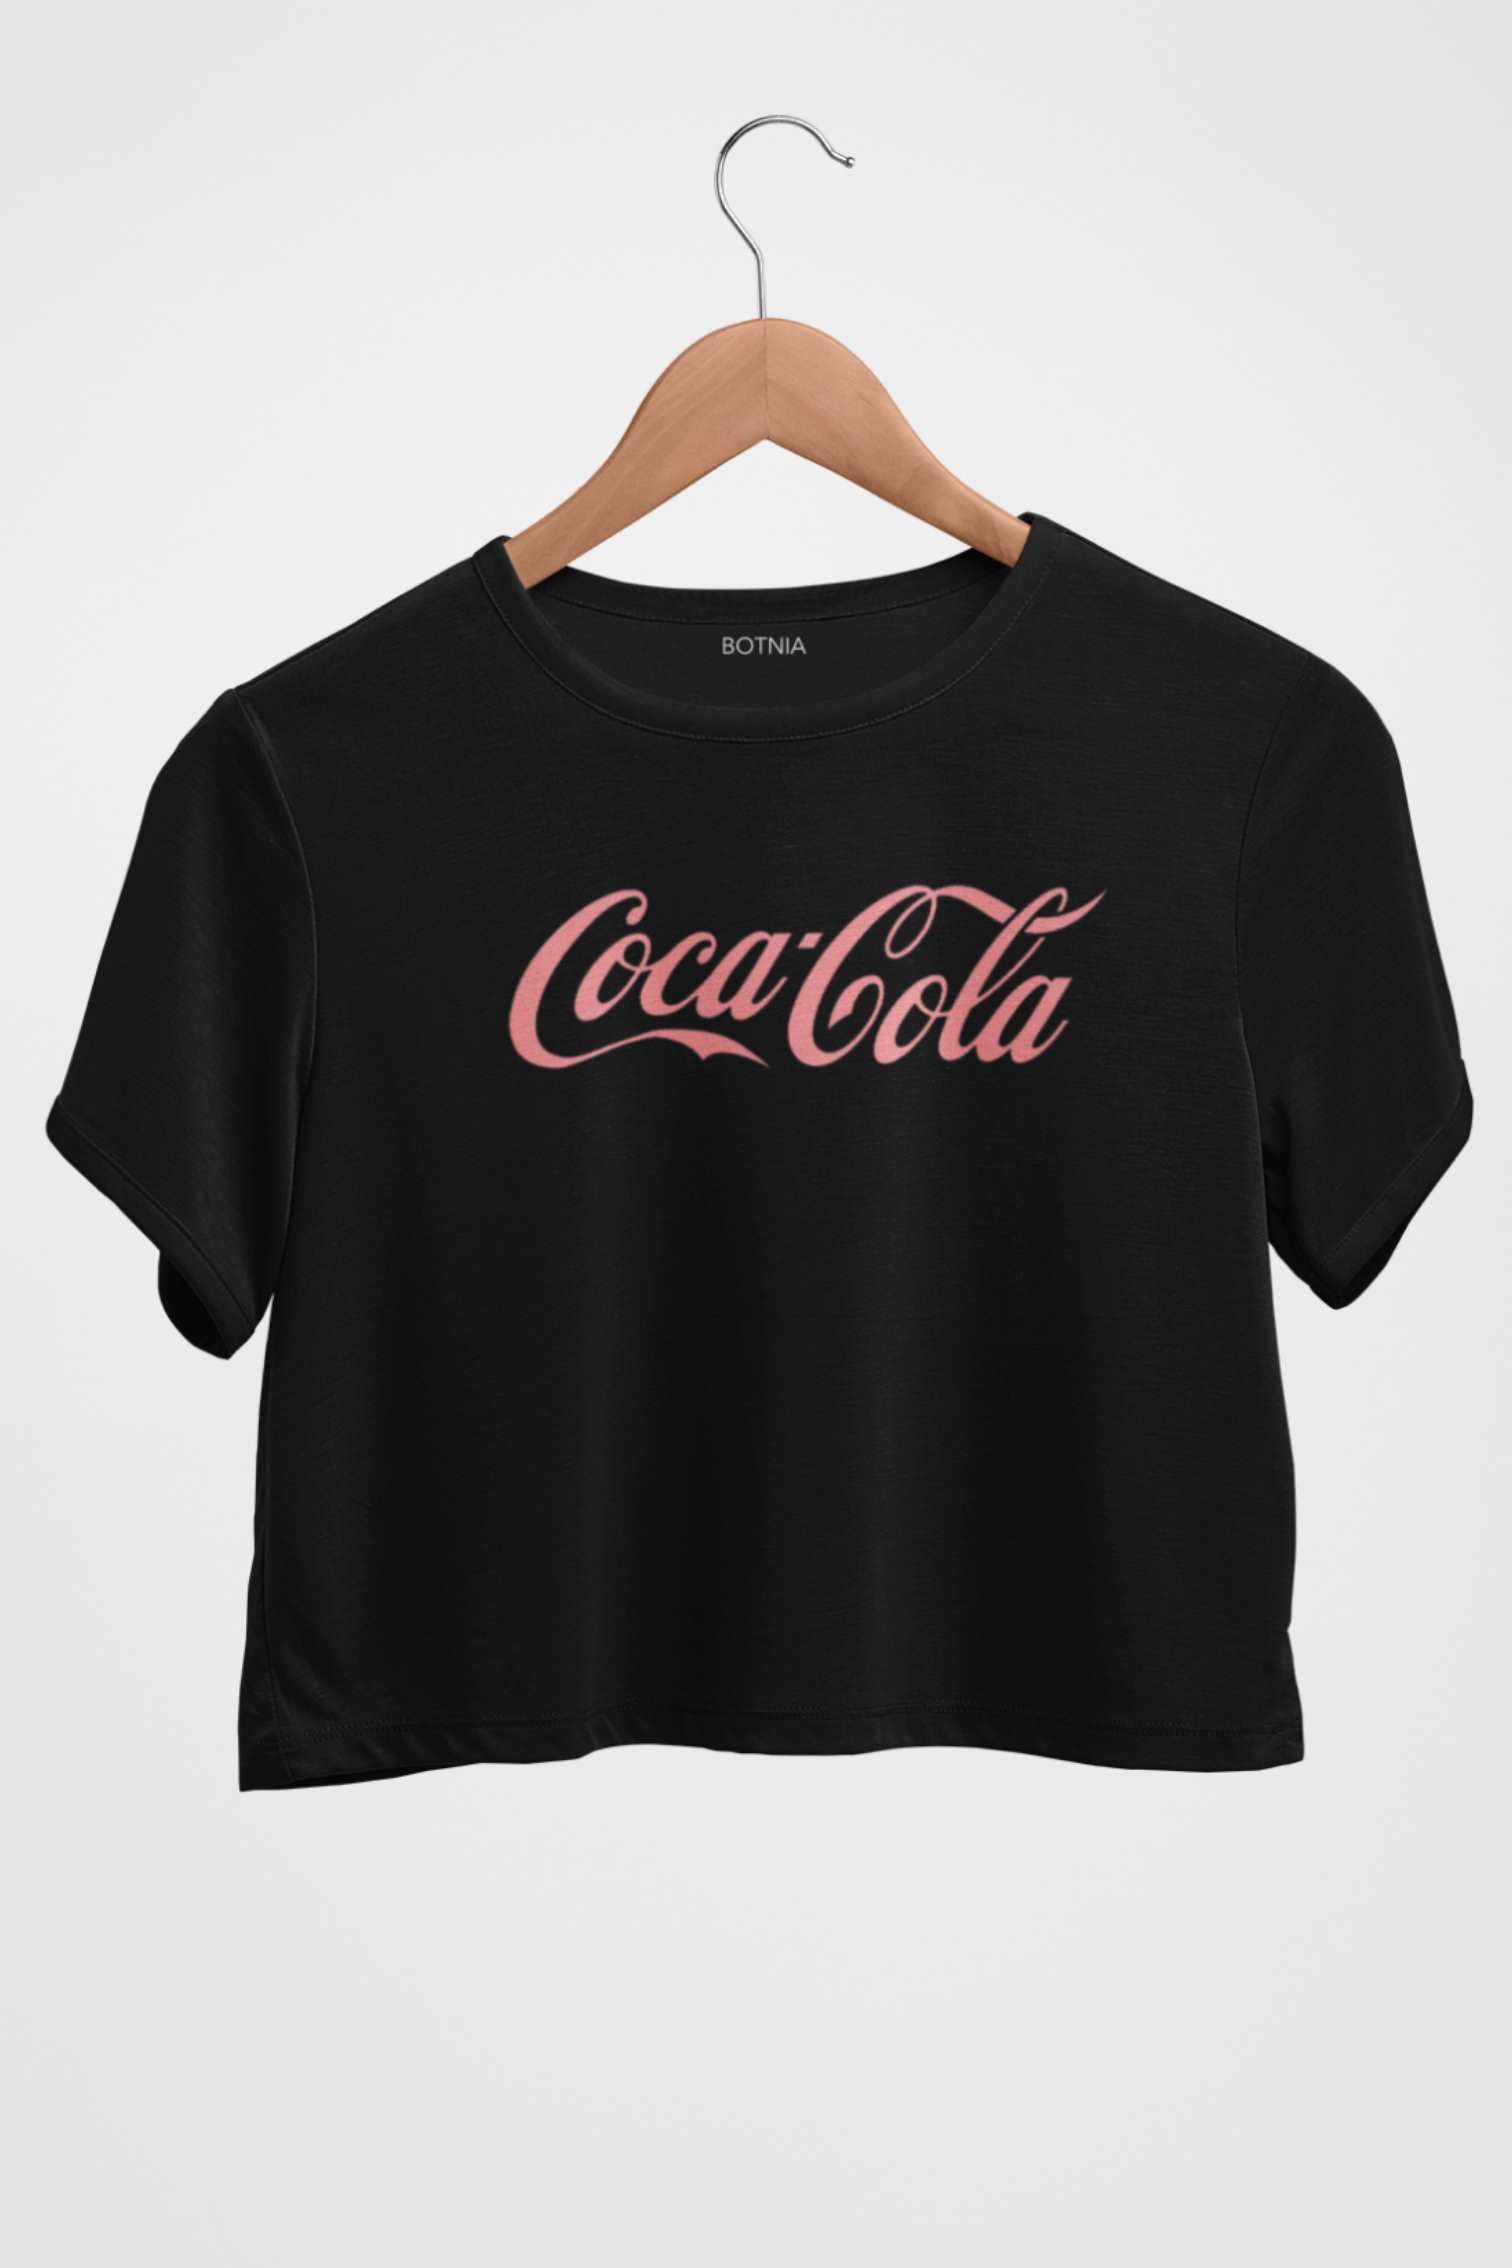 Coca-Cola -Crop Top